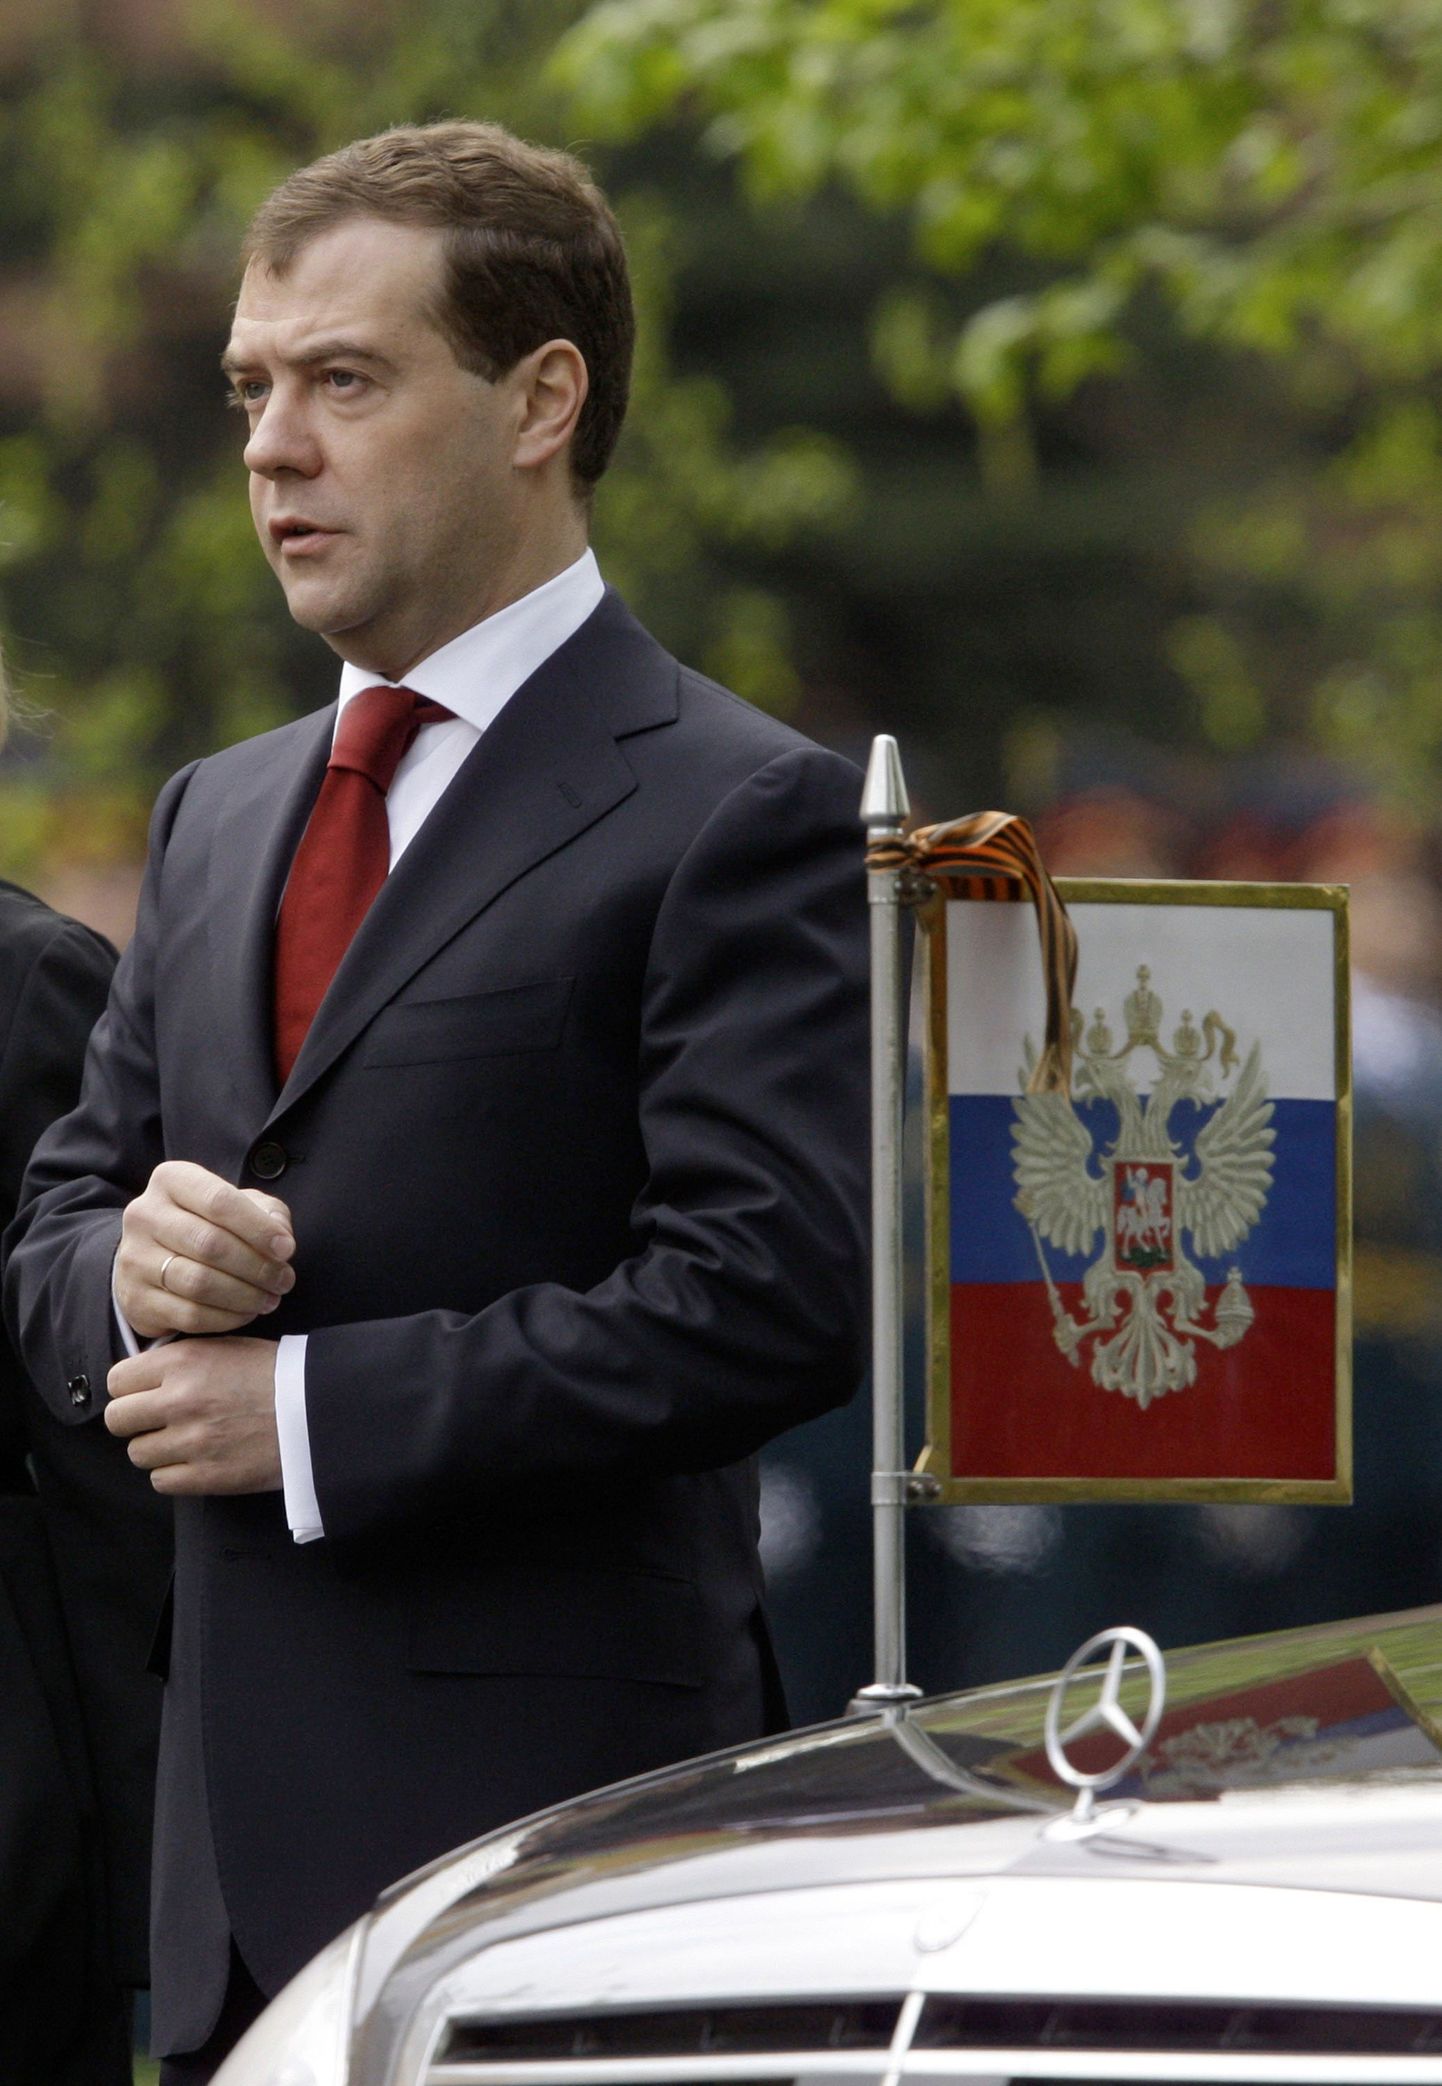 Vene Föderatsiooni president Dmitri Medvedev.